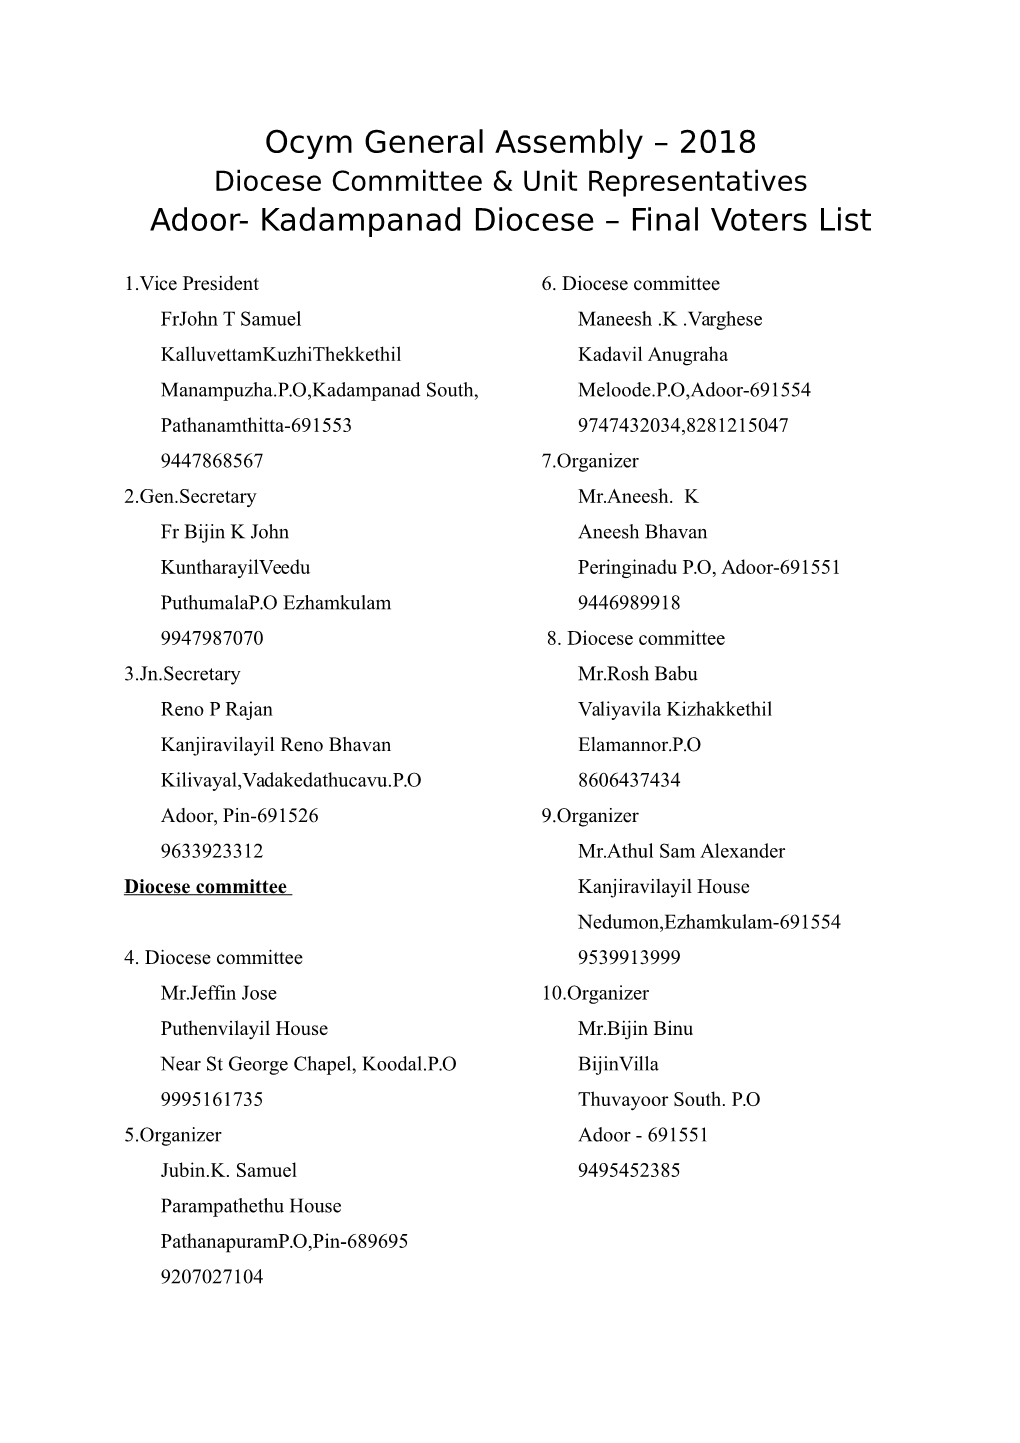 Ocym General Assembly – 2018 Adoor- Kadampanad Diocese